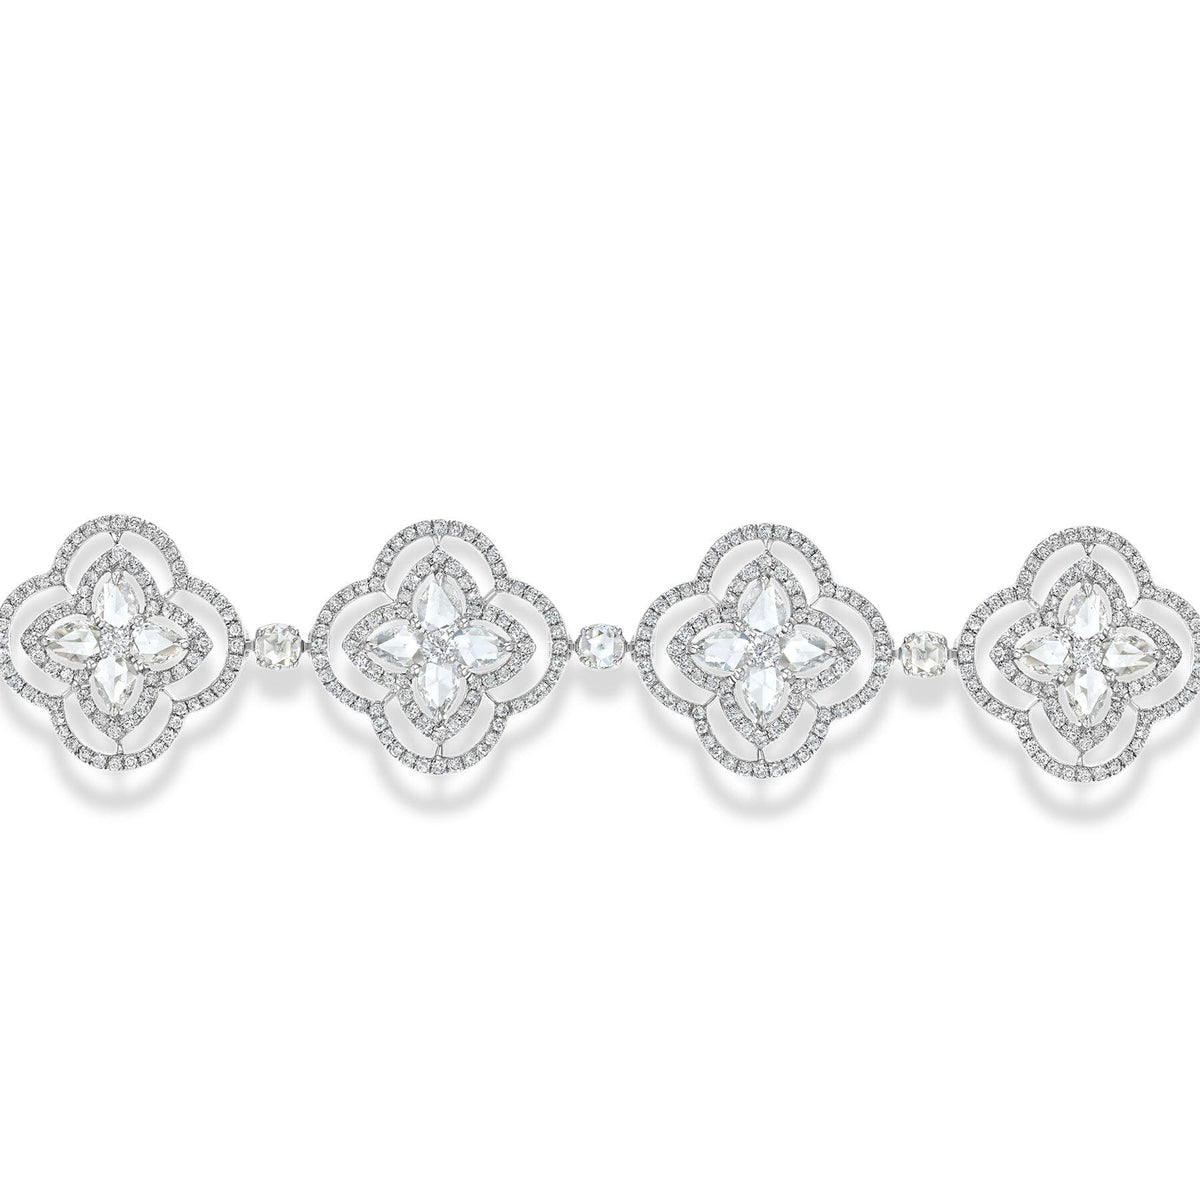 Ever Blossom Bracelet, White Gold & Diamonds - Categories Q05617